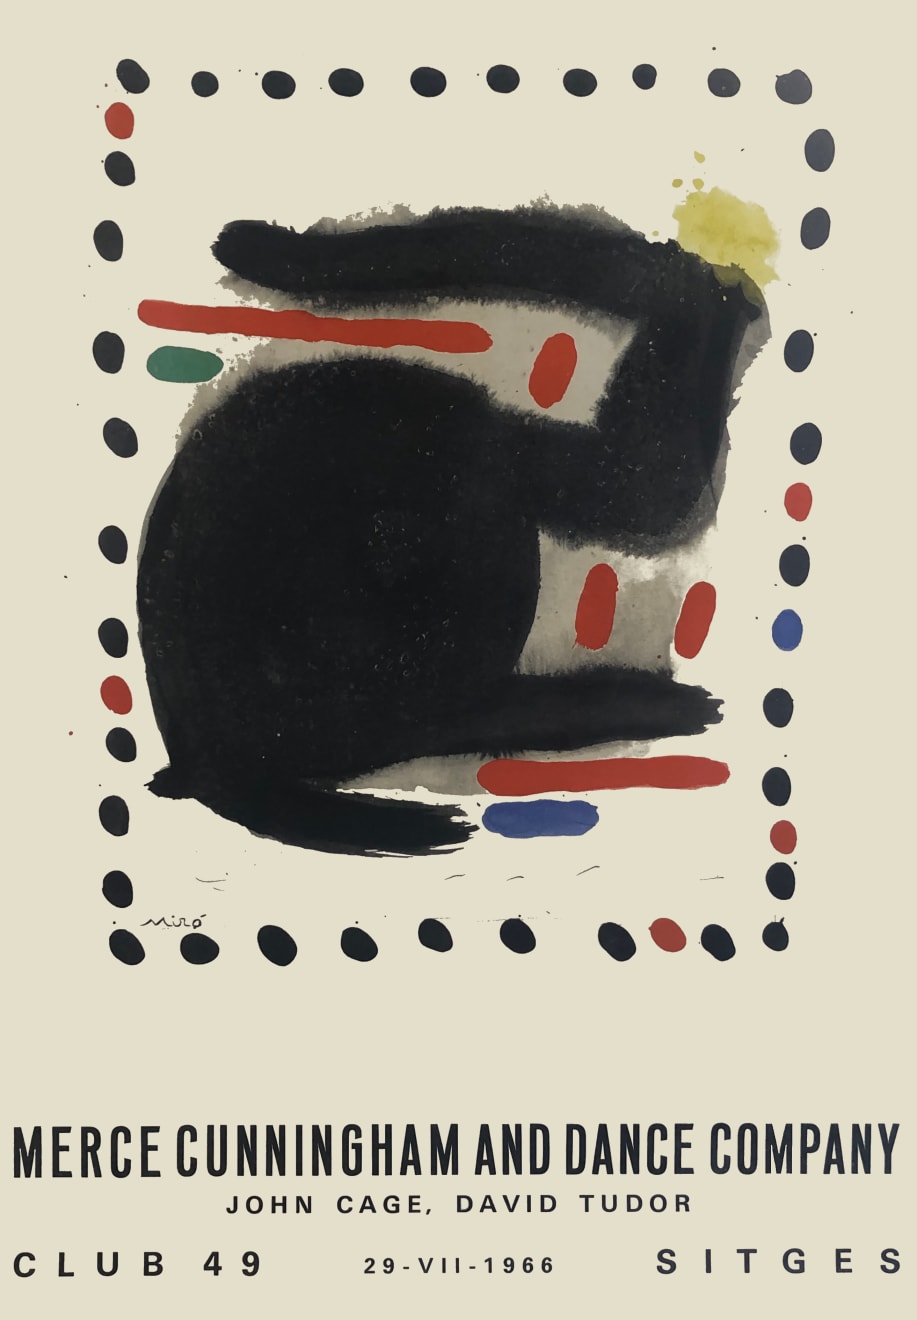 Joan Miró, Merce Cunningham and Dance Company Poster, 1966